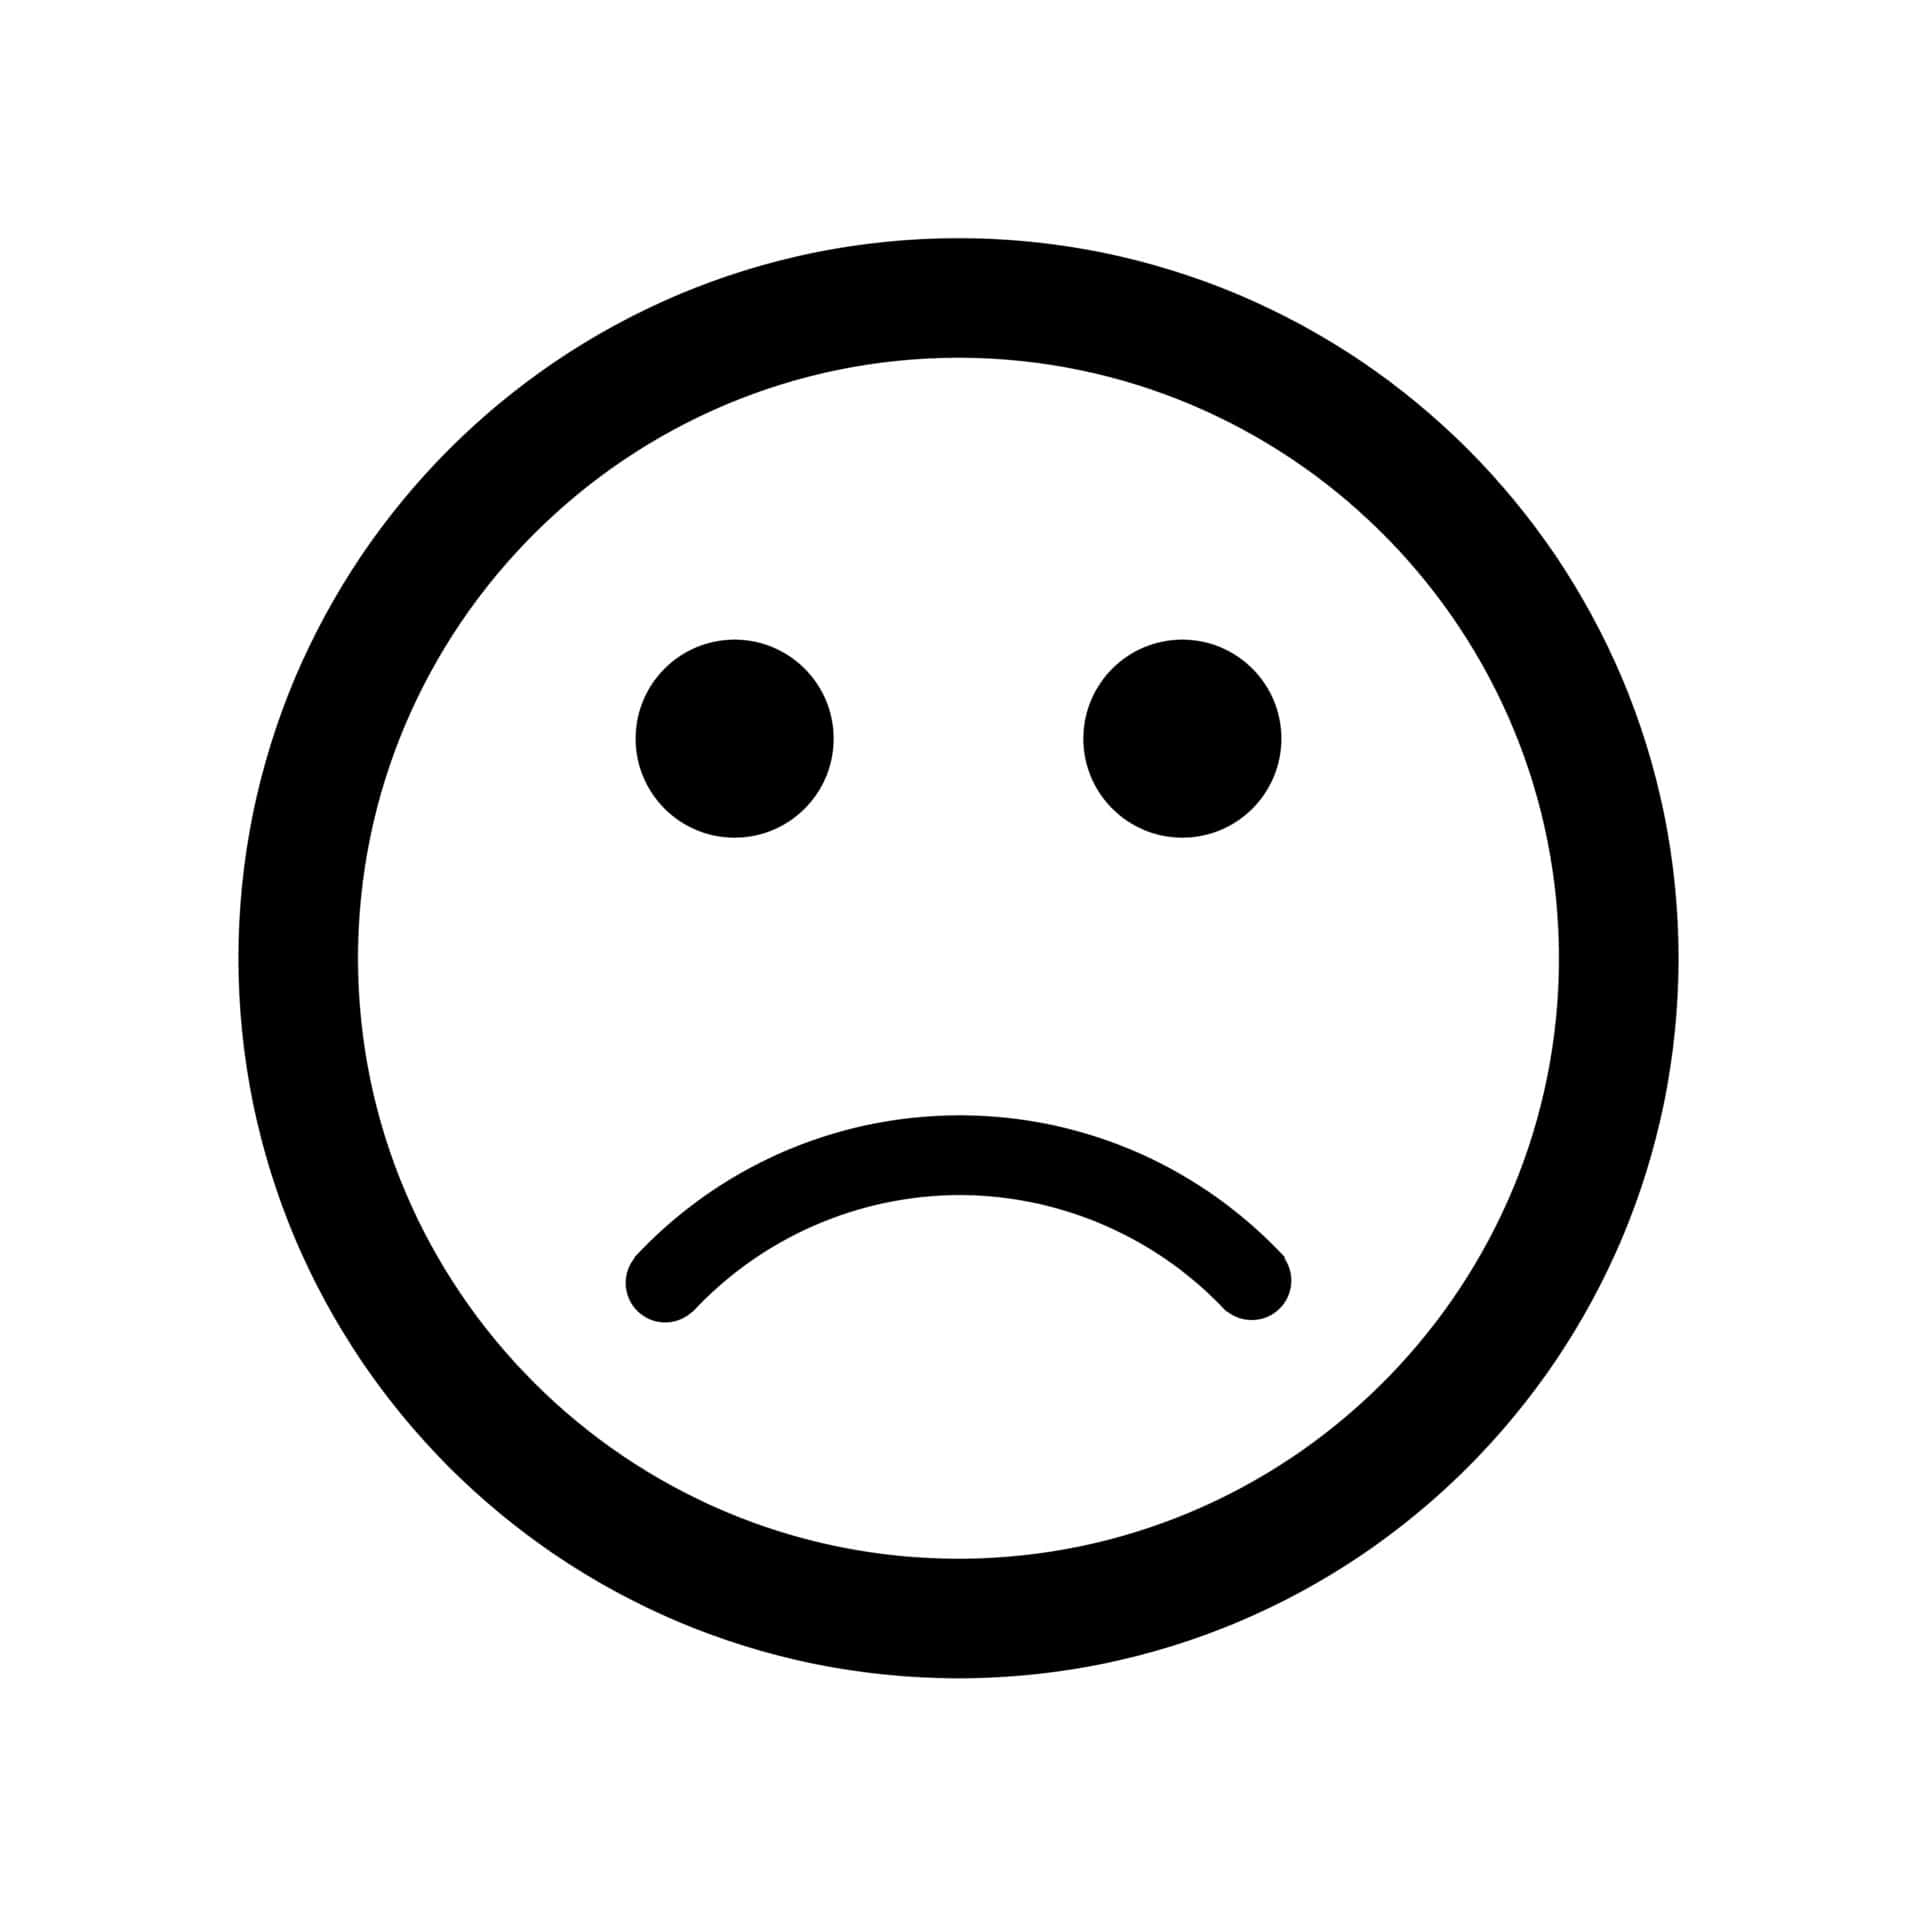 A Sad Emoticon Icon On A White Background